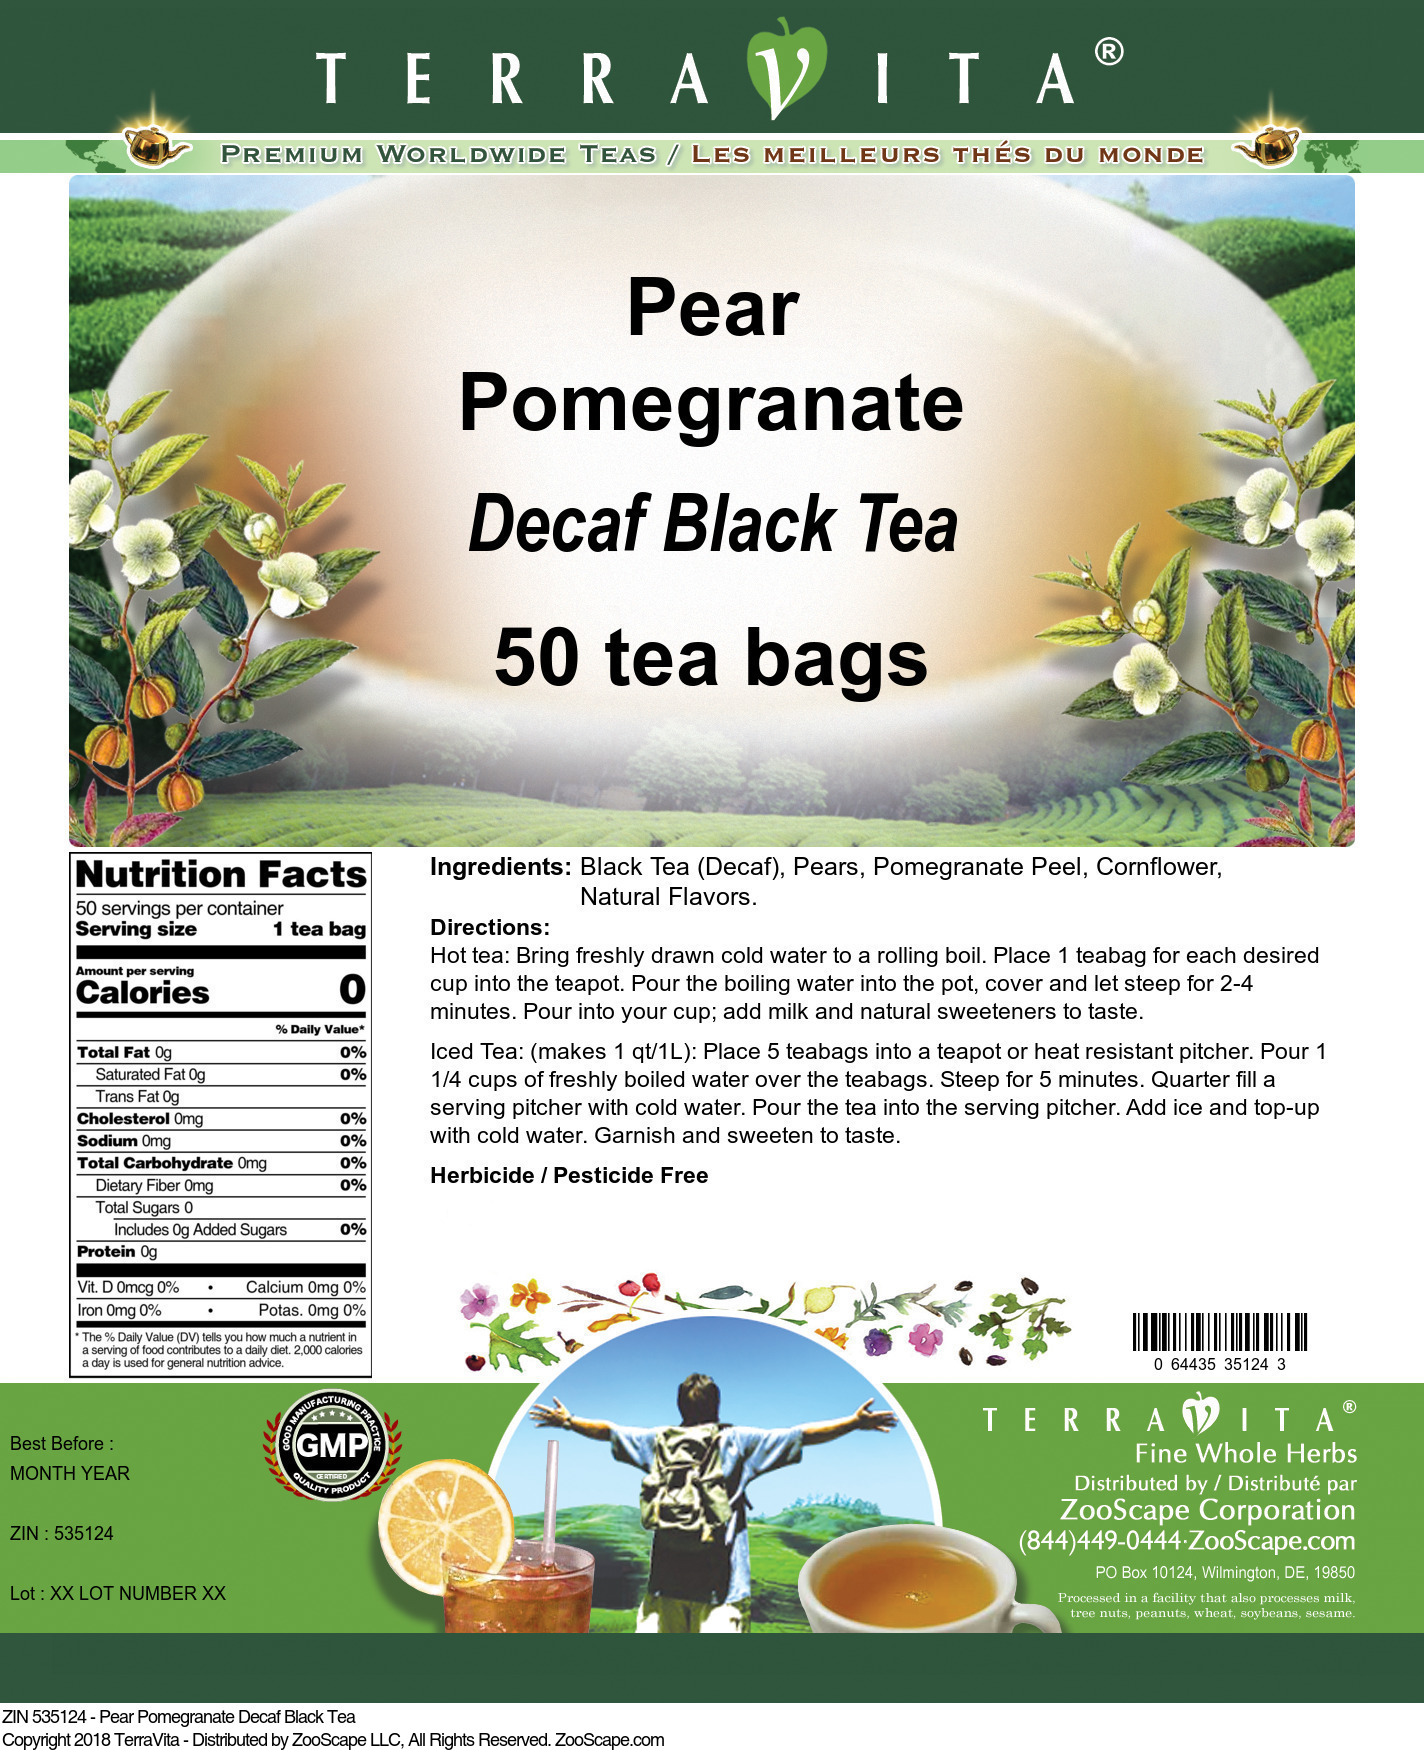 Pear Pomegranate Decaf Black Tea - Label